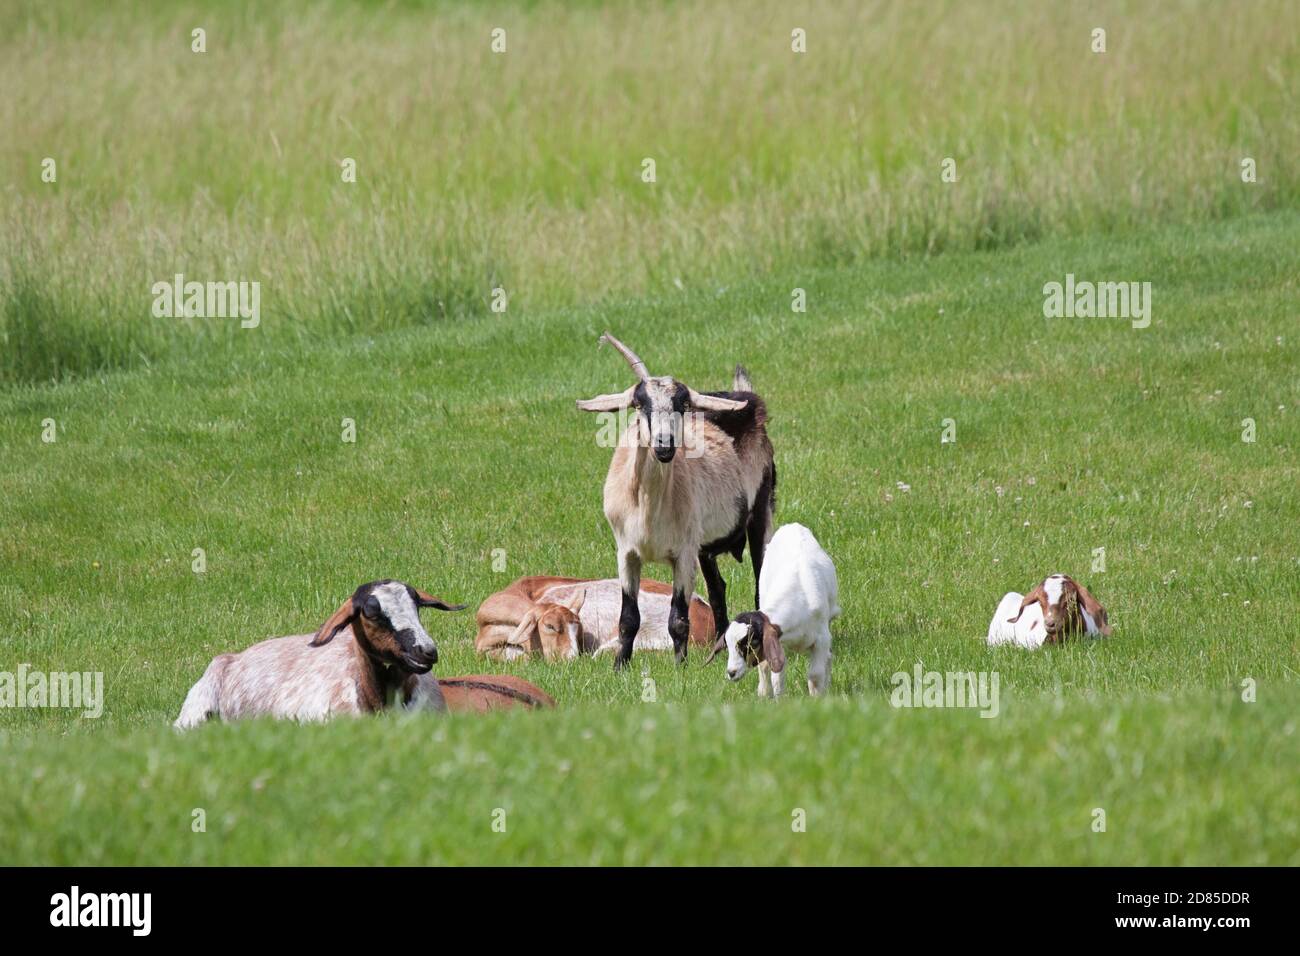 A herd of goats grazes in a green field Stock Photo